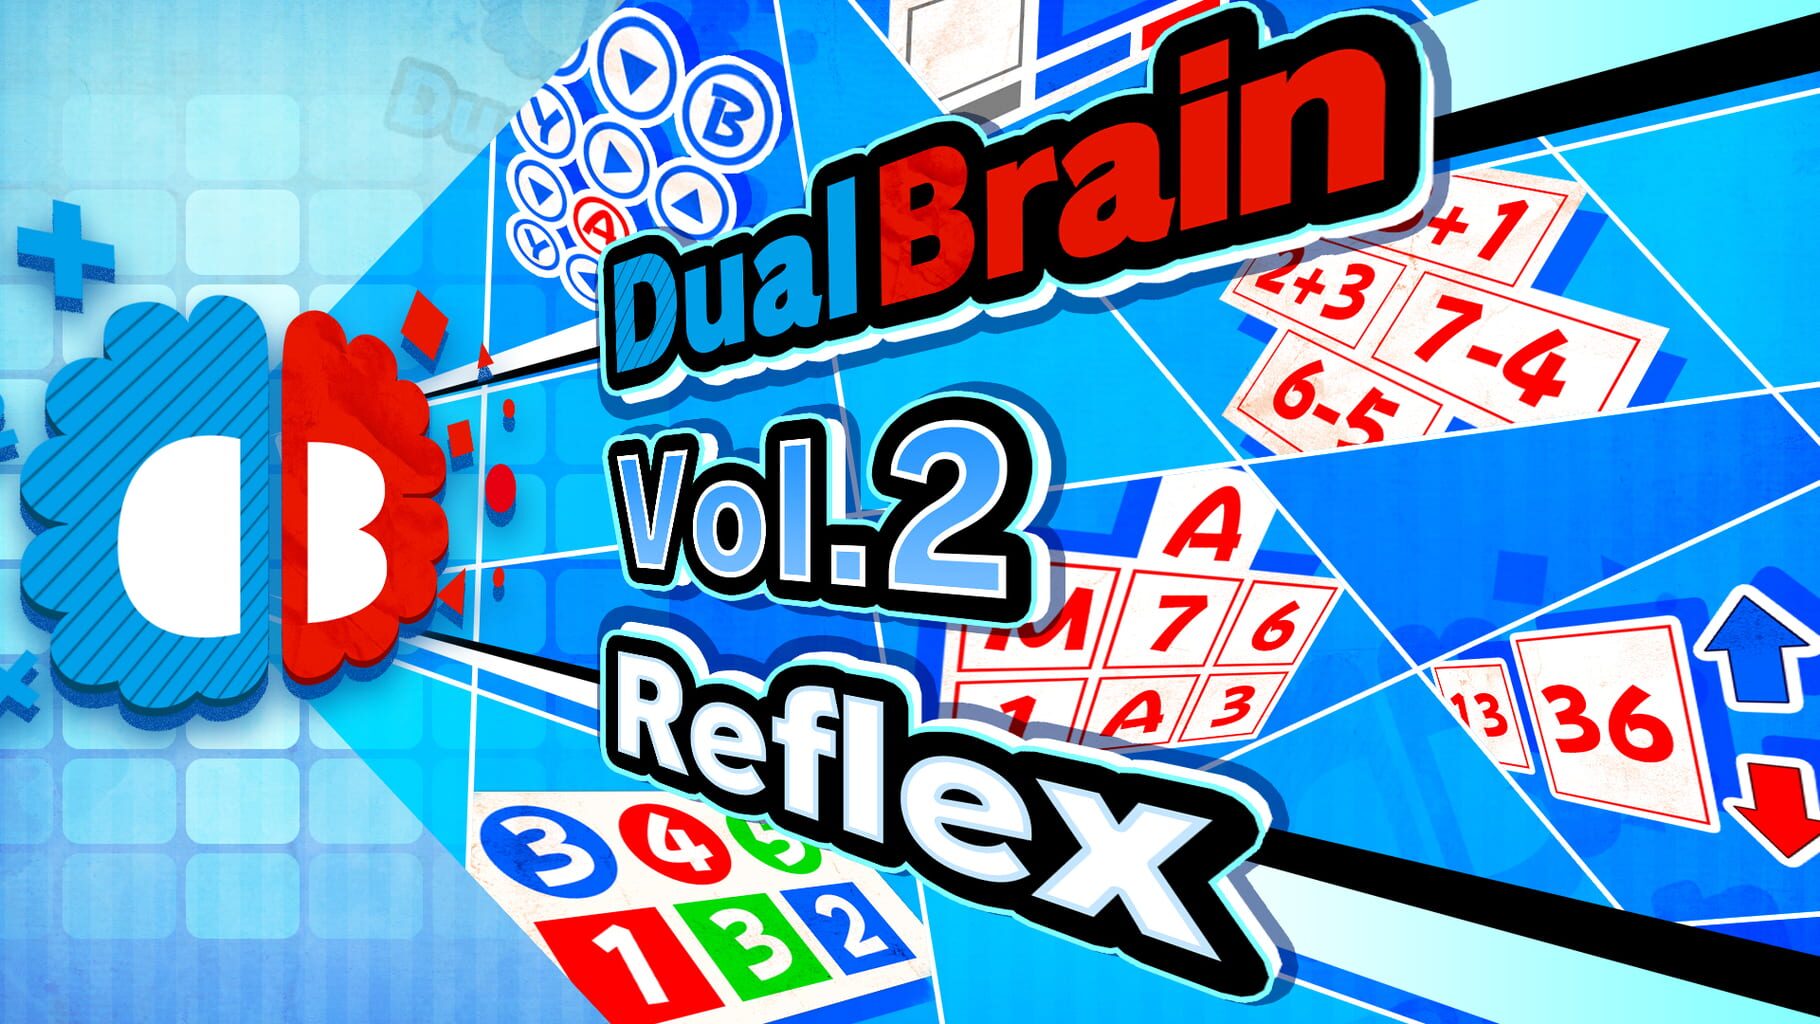 Dual Brain Vol.2: Reflex artwork